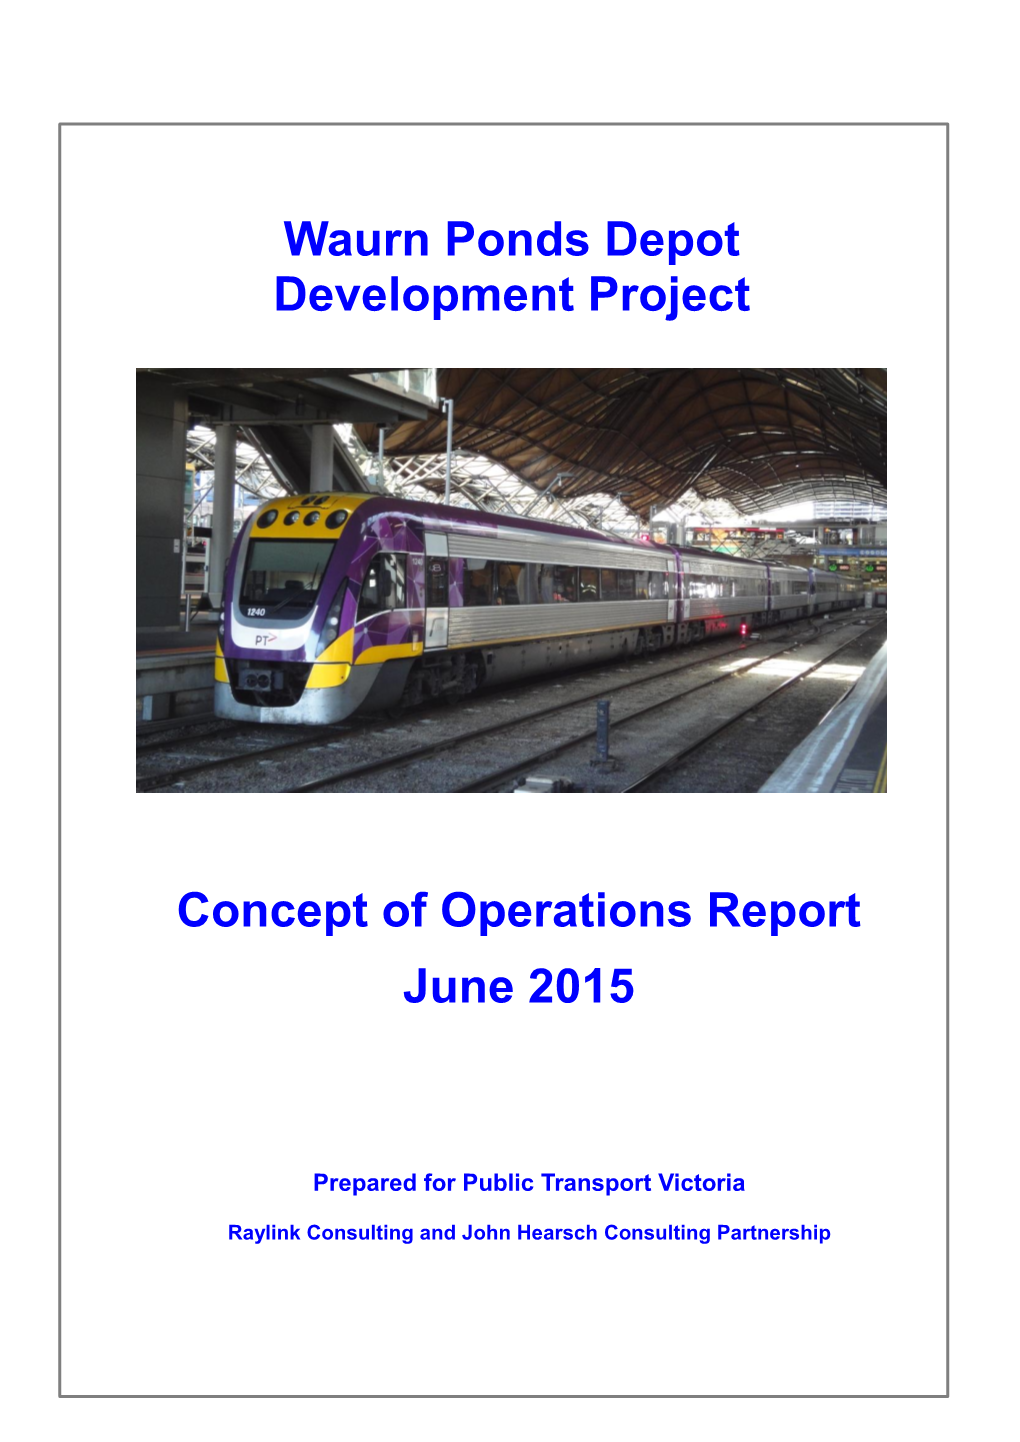 Waurn Ponds Depot Development Project Concept of Operations